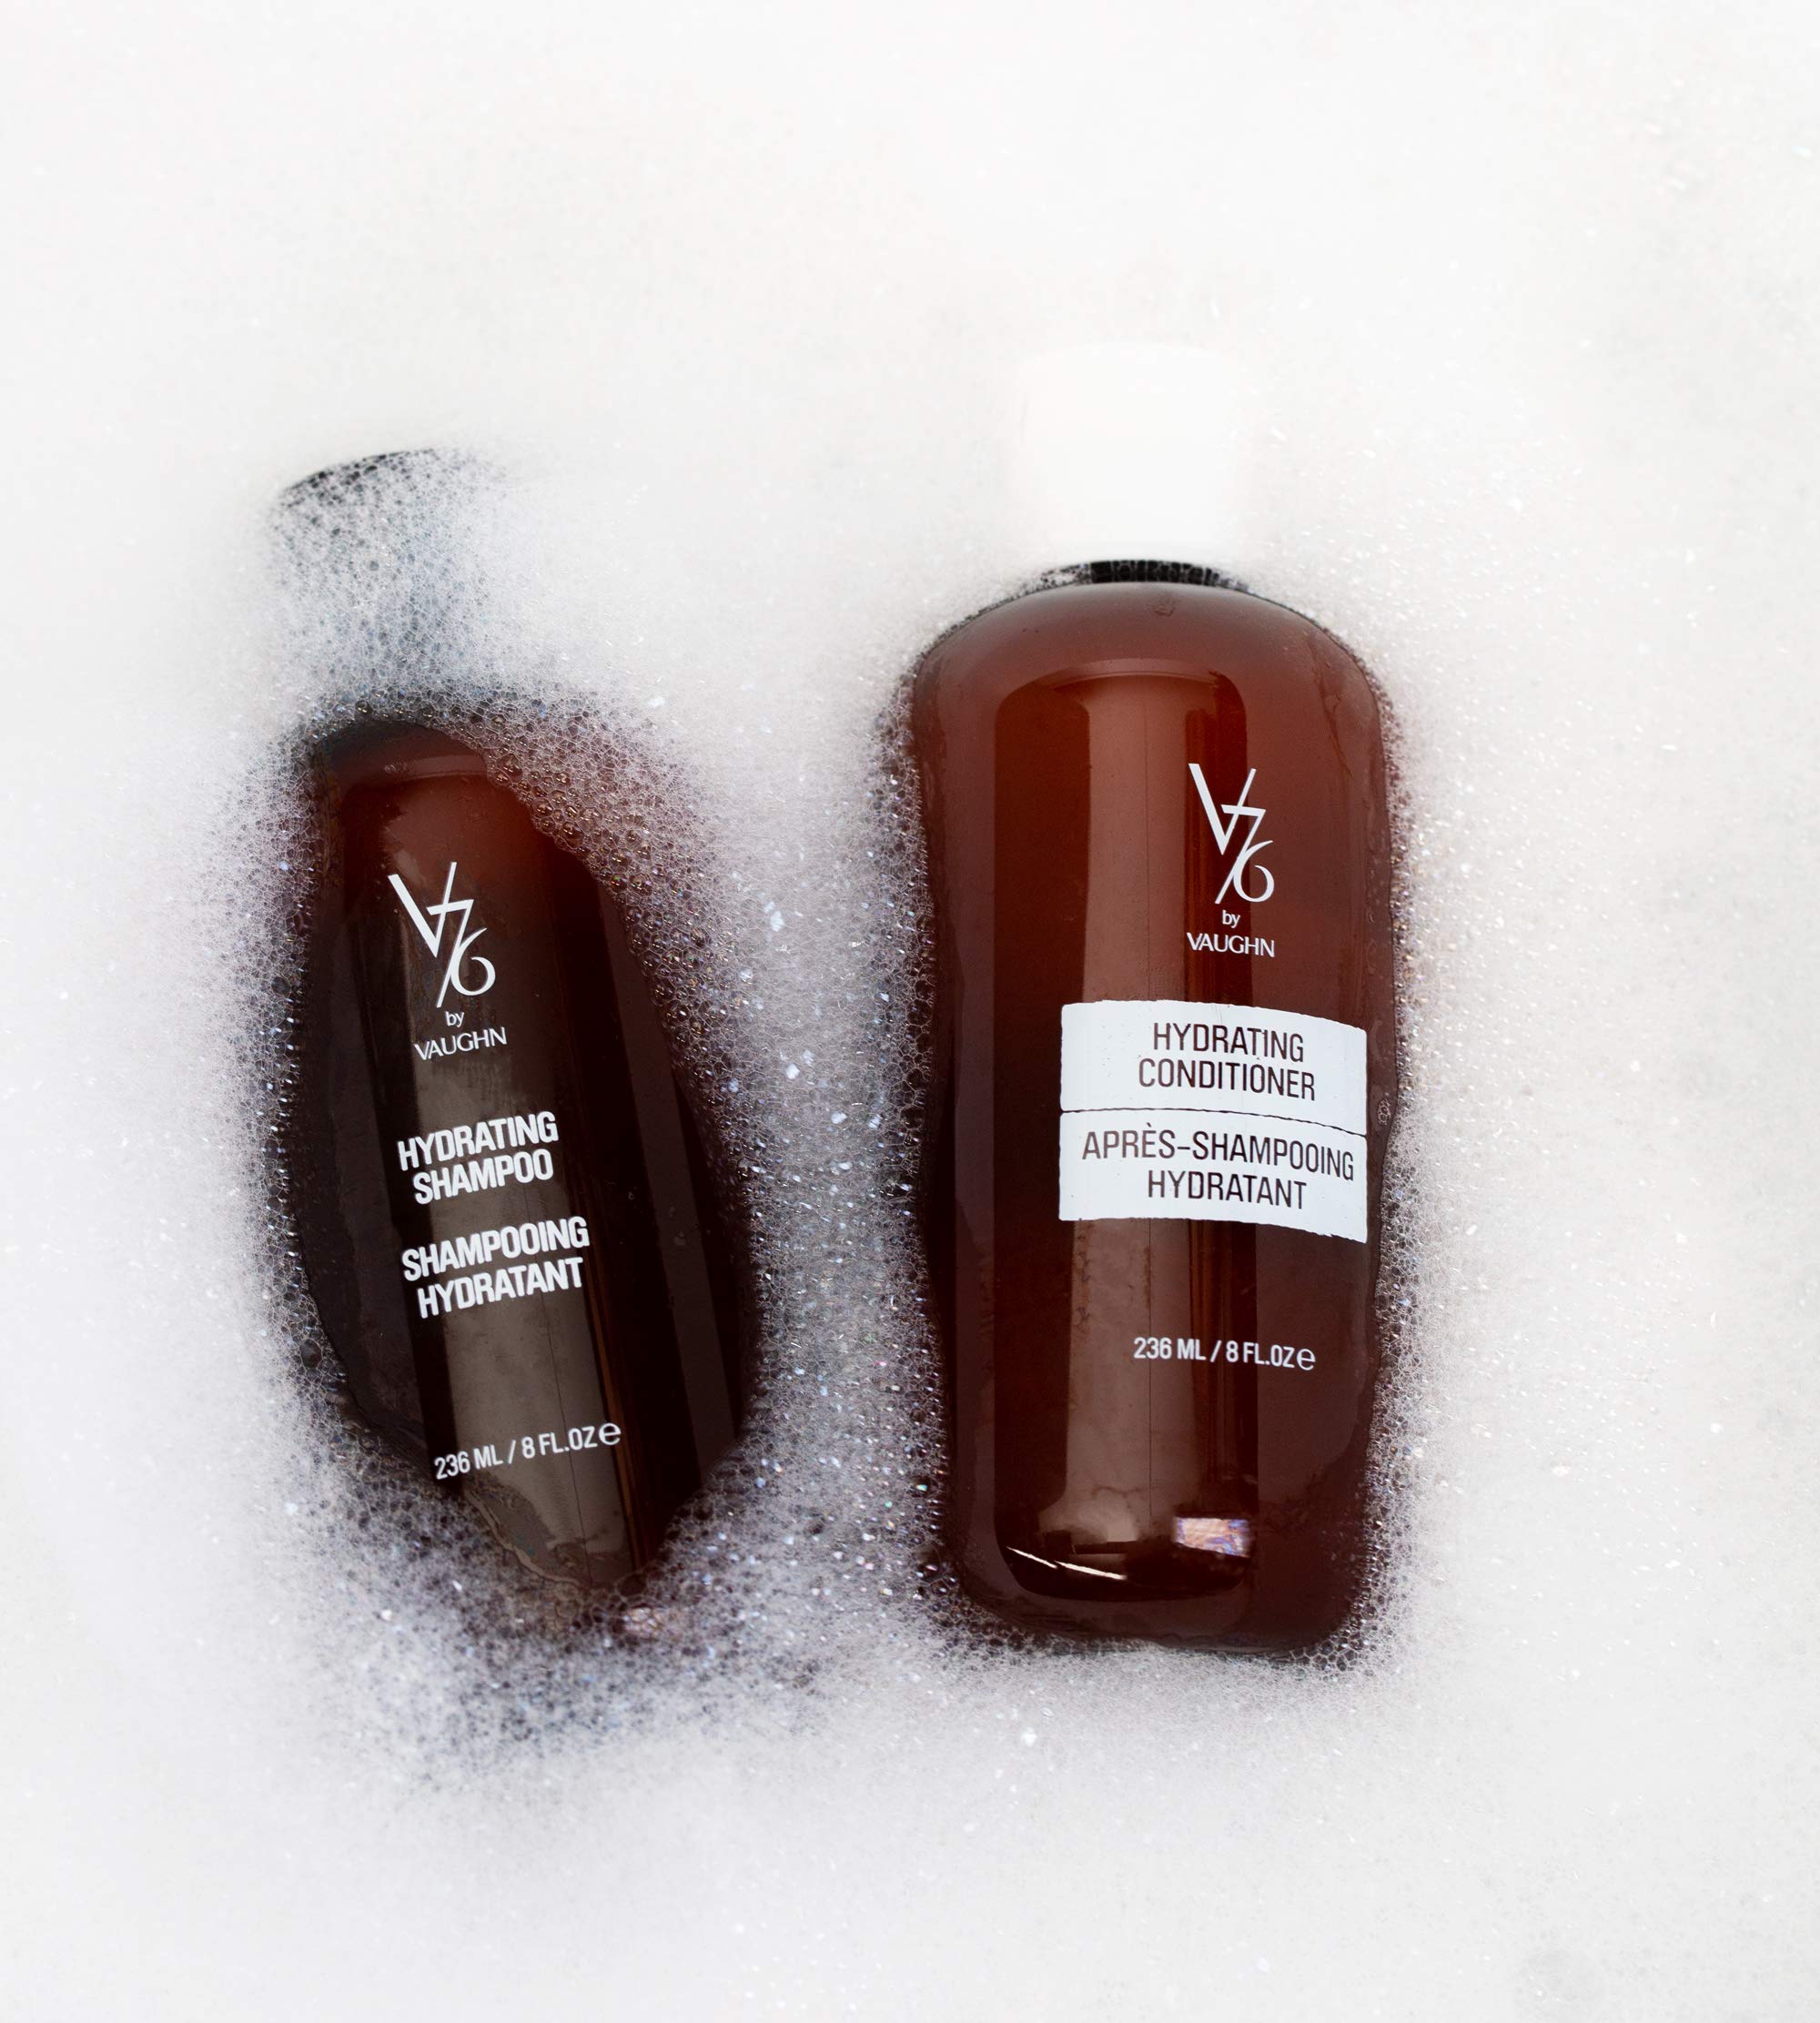 V76 by Vaughn Hydrating Shampoo Formula for Men